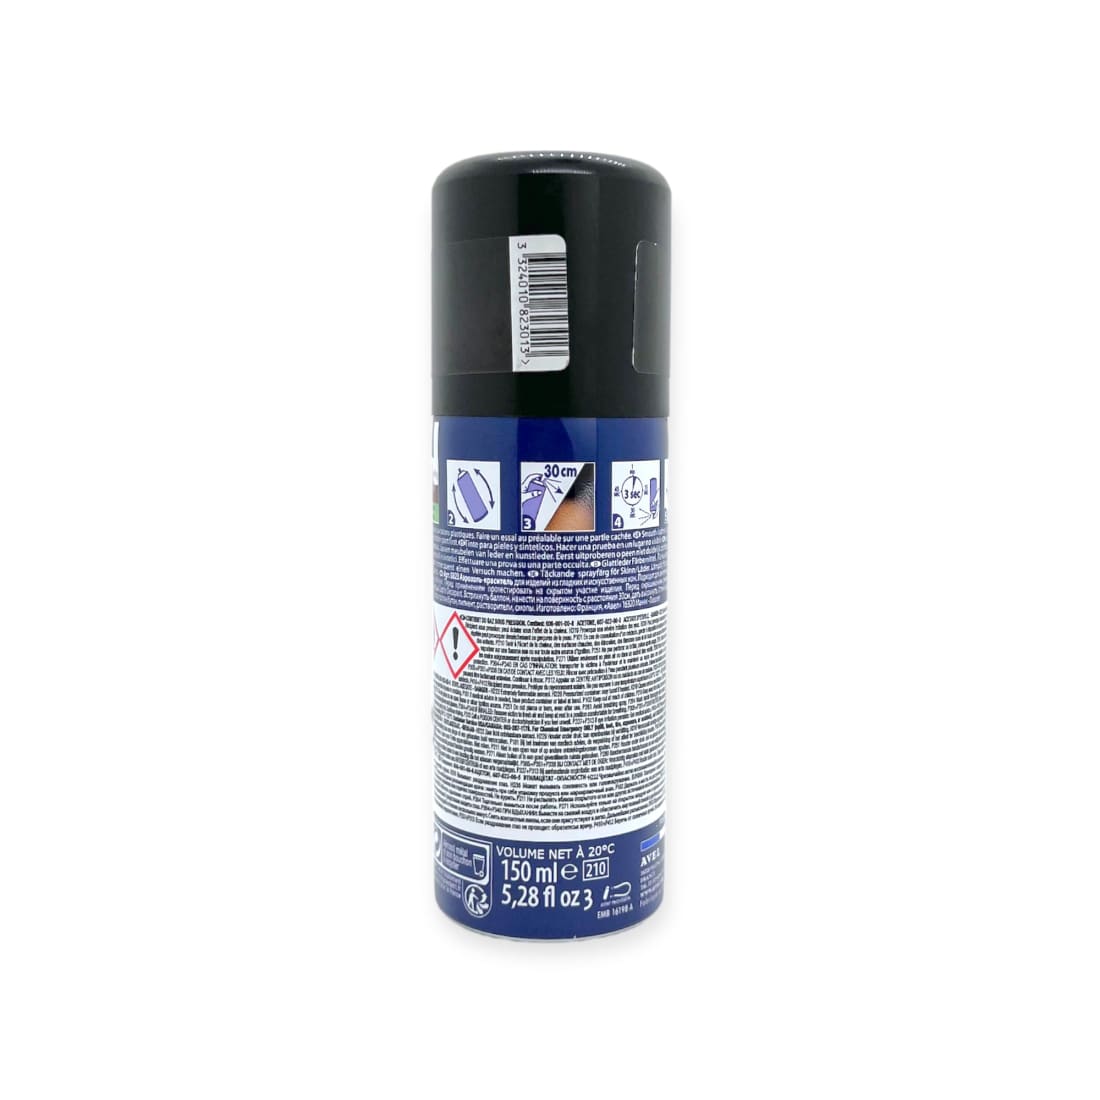 Spray Tenax Teinture Gabardine - Saphir - 150 ml -